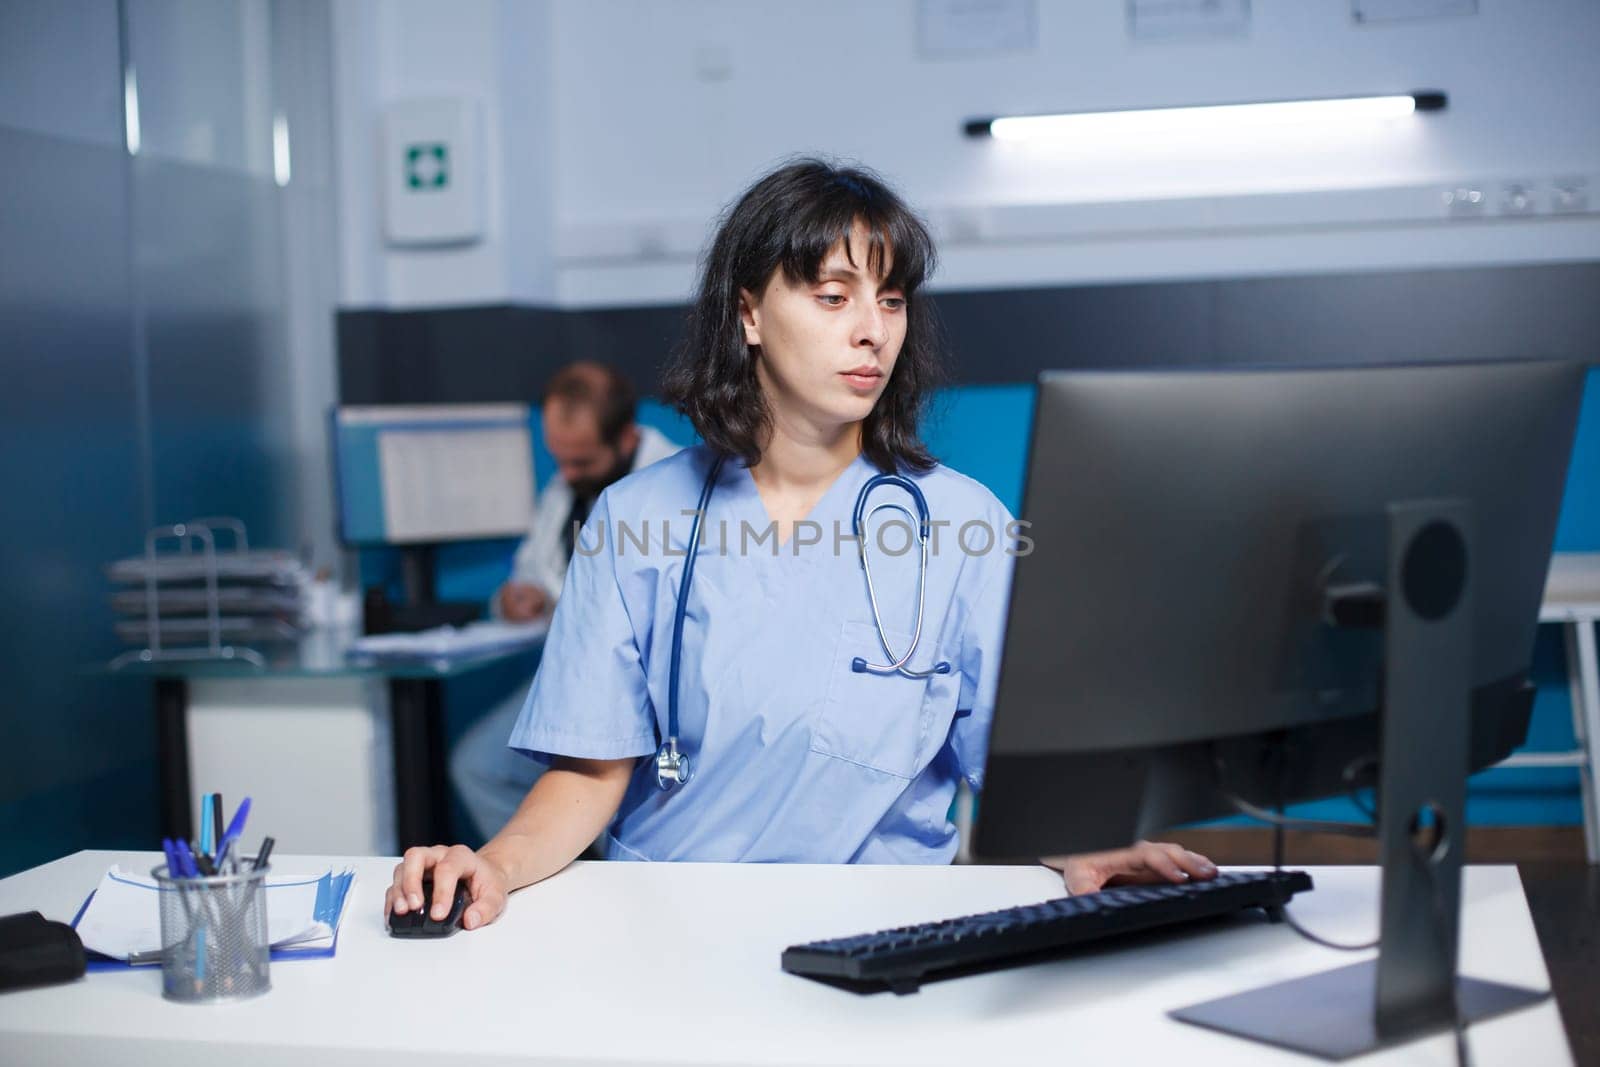 Nurse checking medical files on desktop by DCStudio